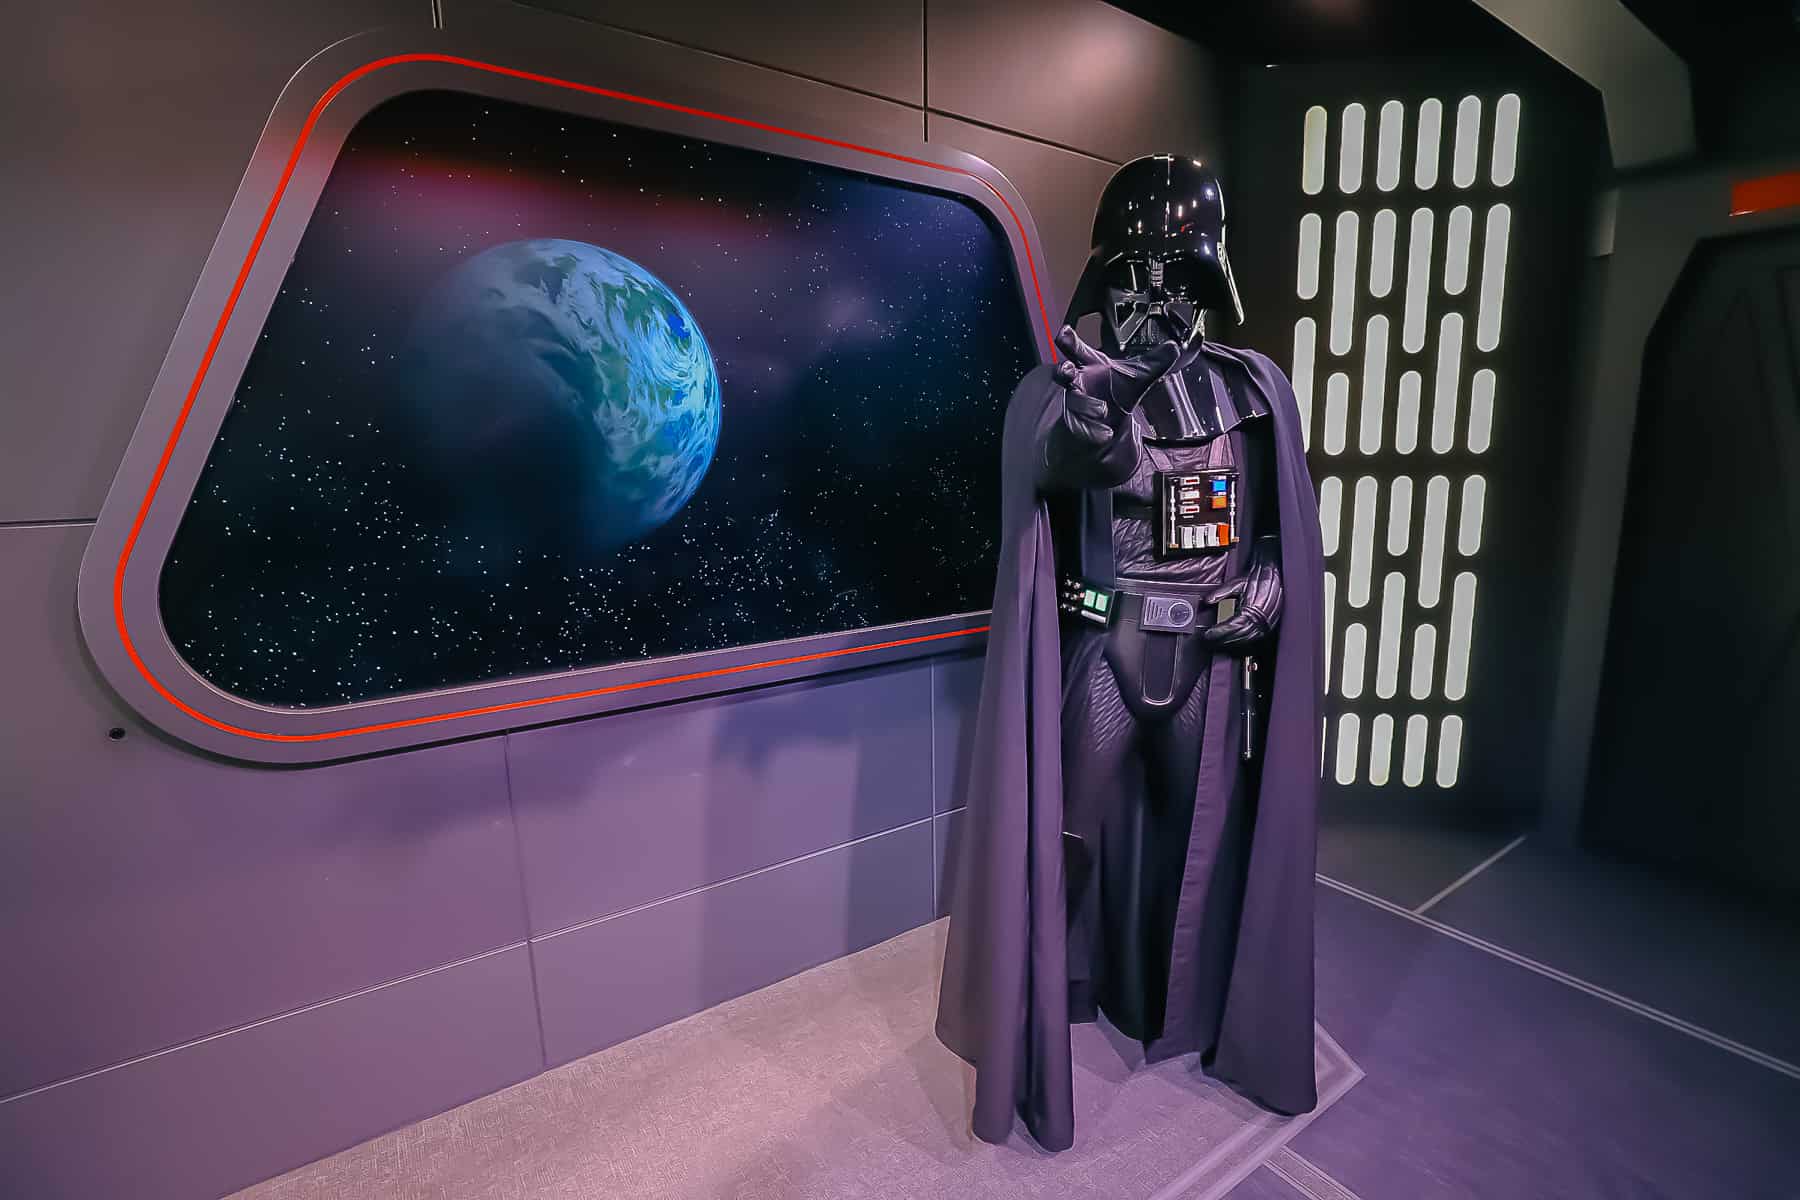 Darth Vader trying to use the force at his meet-and-greet at Hollywood Studios. 